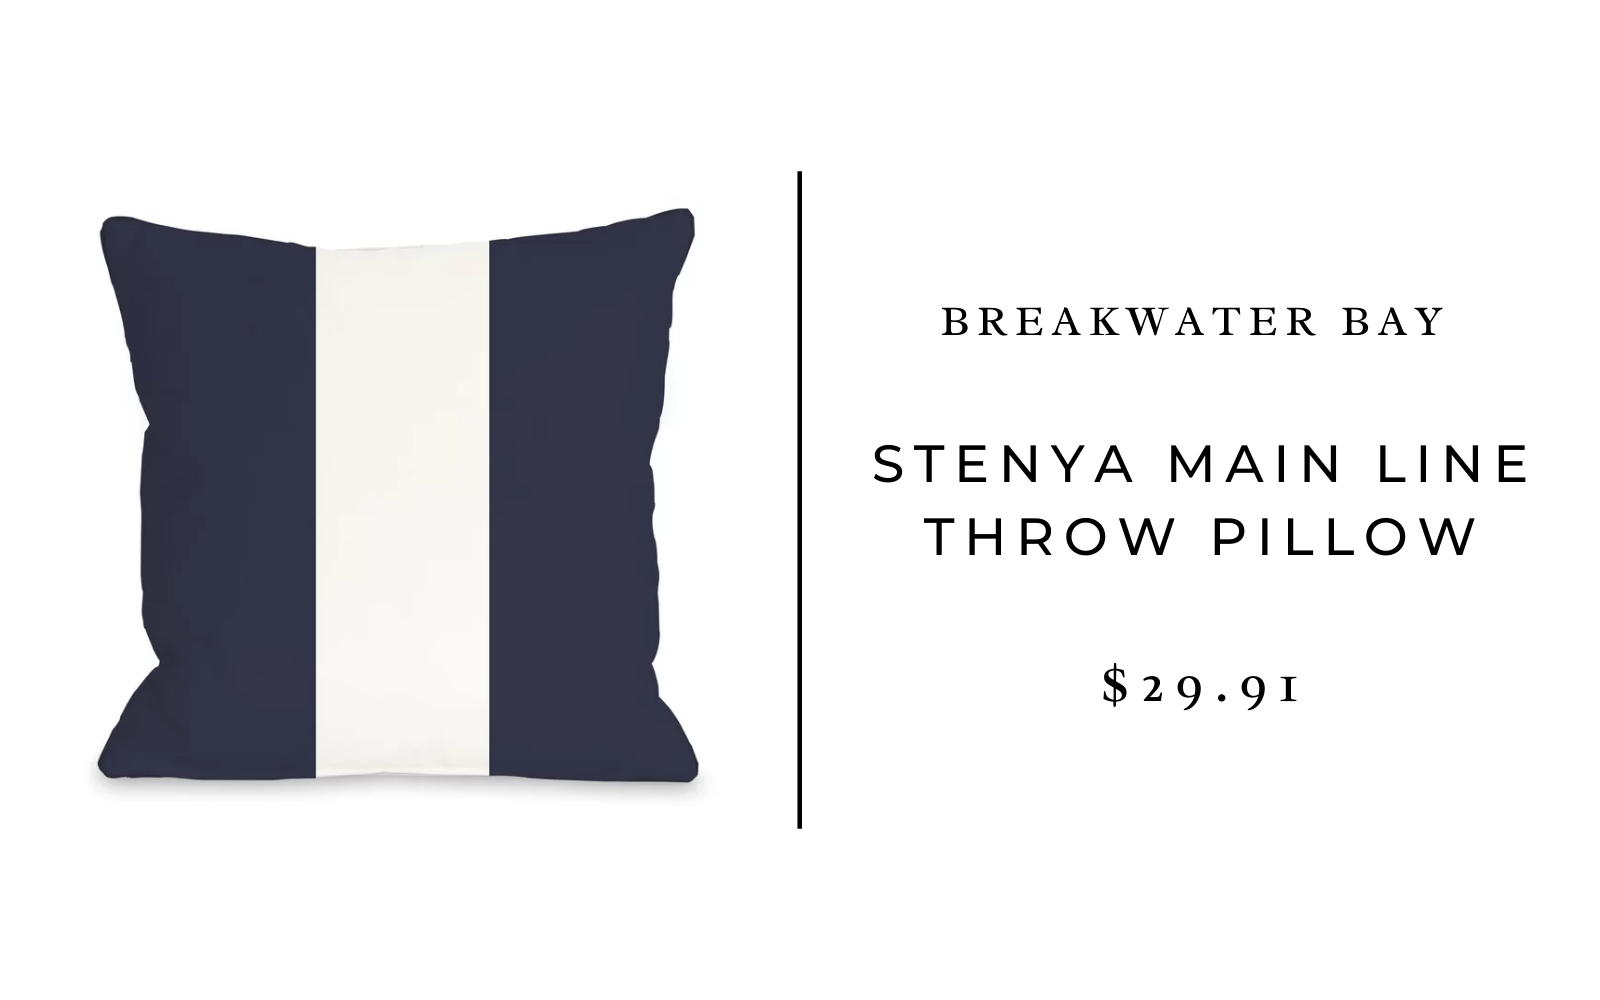 stenya main line throw pillow